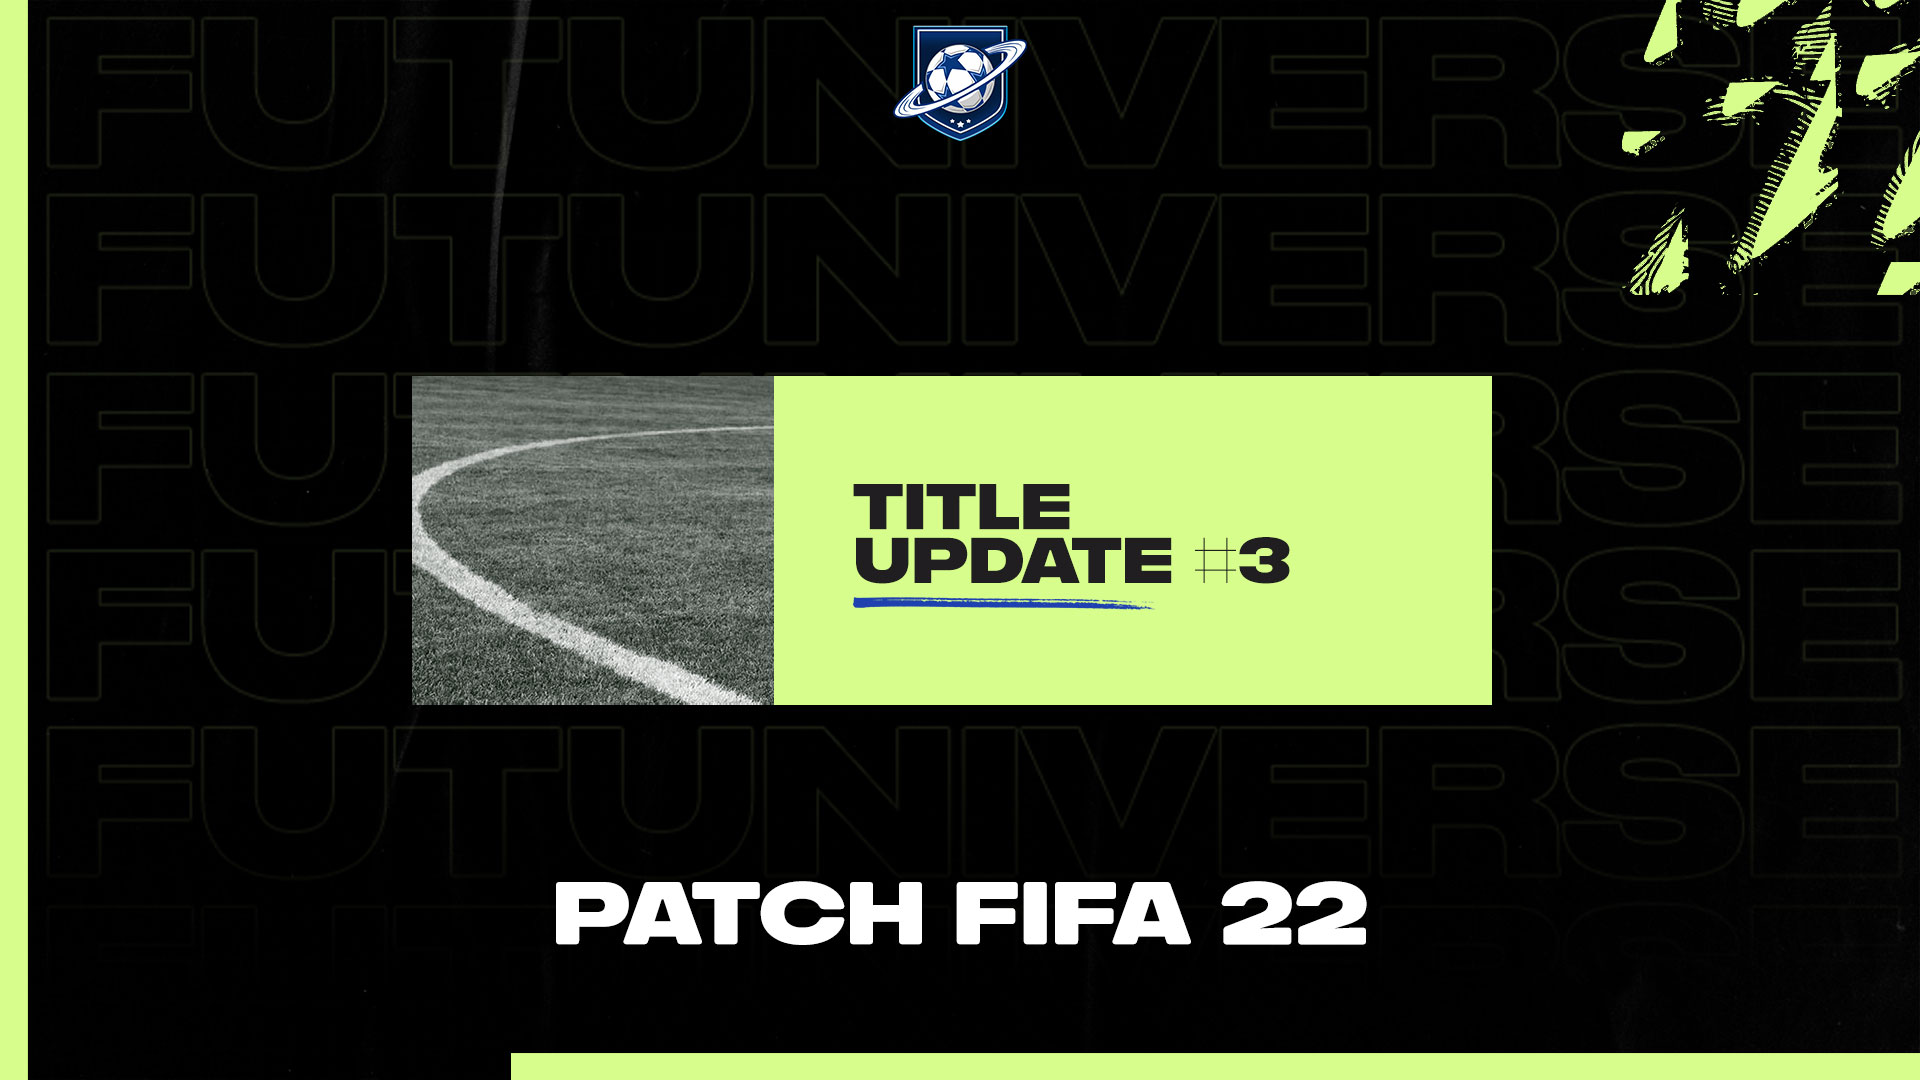 FIFA 22 Patch &ndash; Title Update 3: the third update is coming -  D1SoftballNews.com